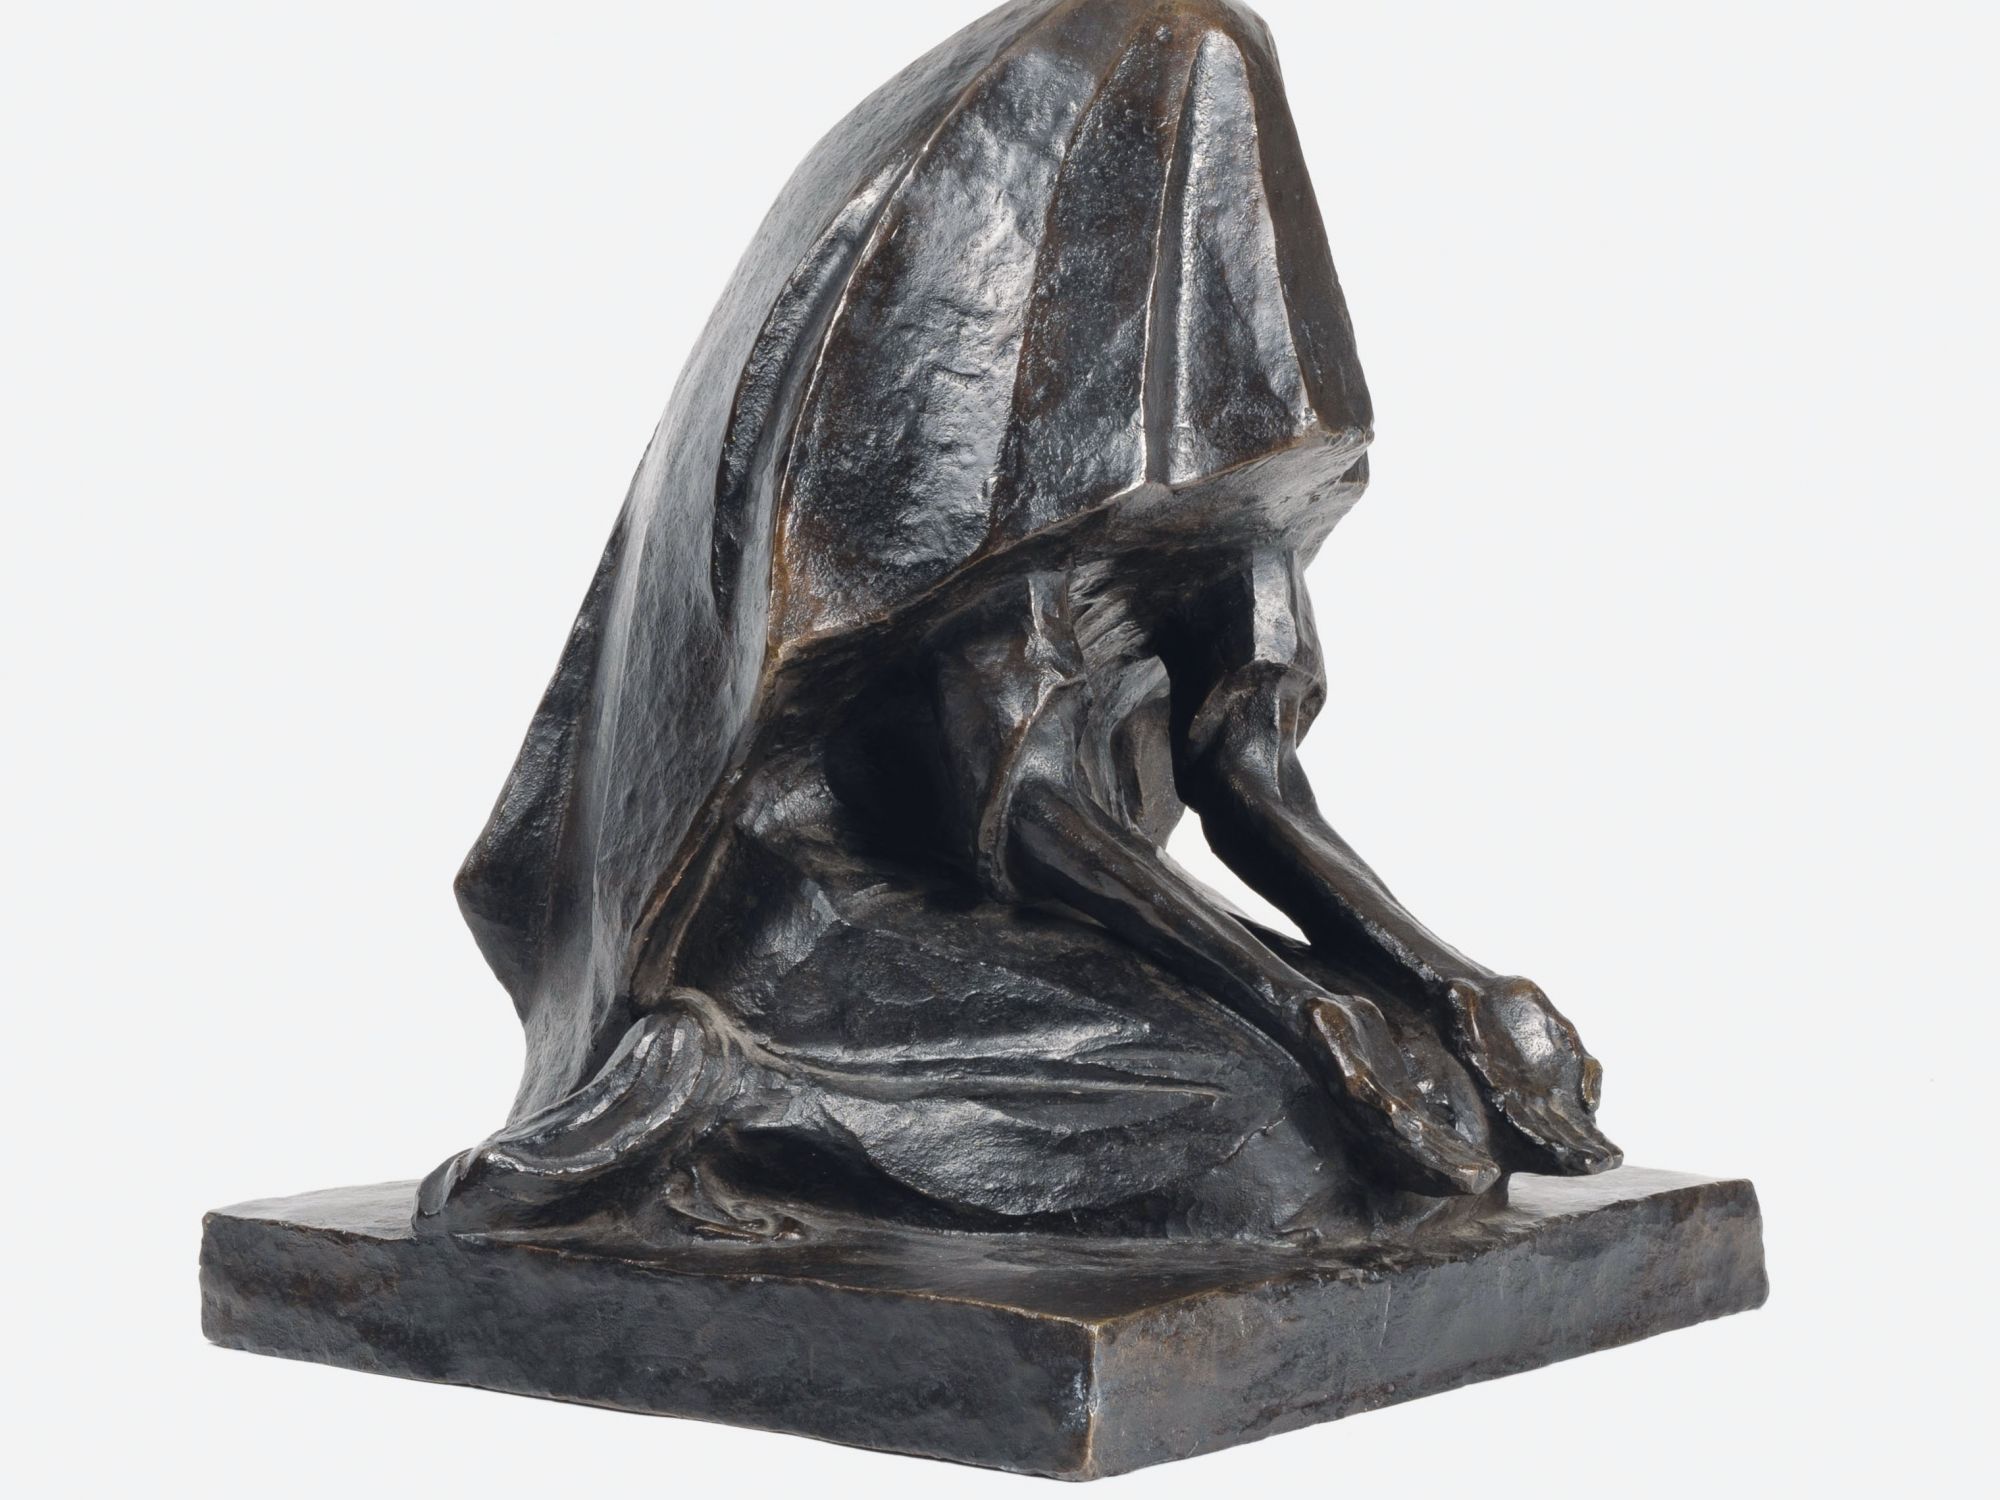 A Veiled Beggar Woman (Charity)